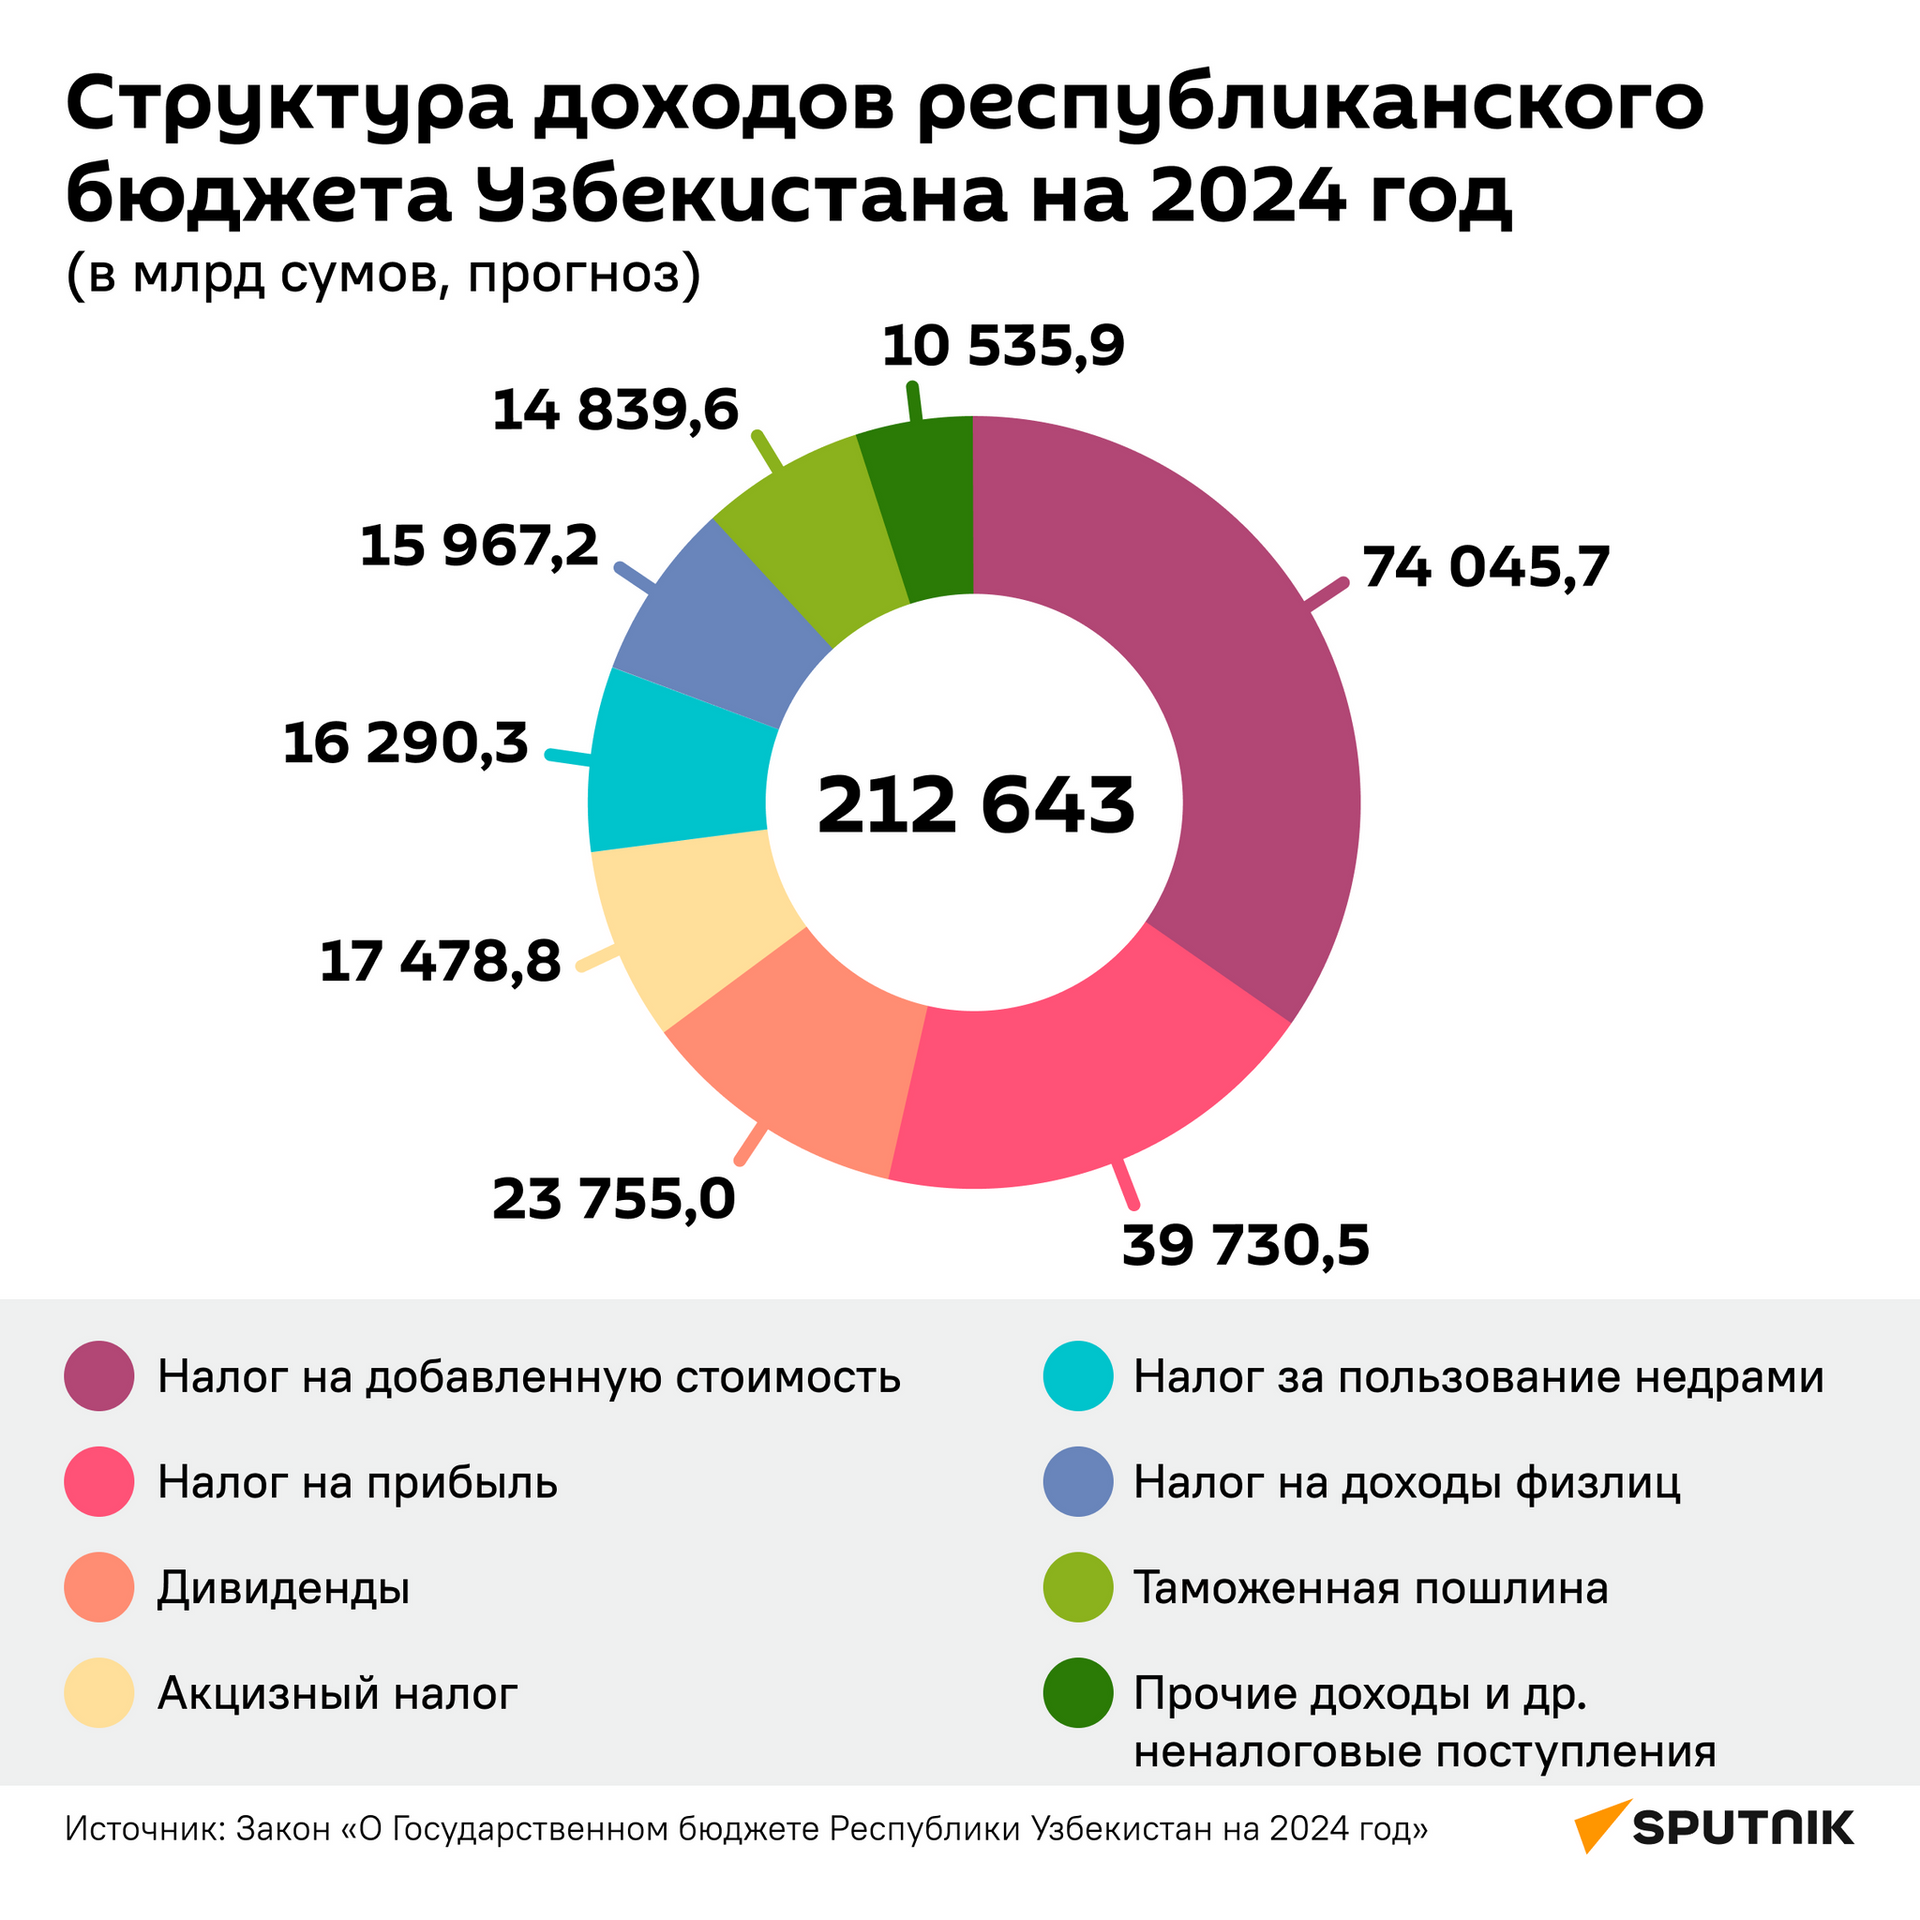 Структура прогноза доходов госбюджета Узбекистана на 2024год - Sputnik Узбекистан, 1920, 28.12.2023